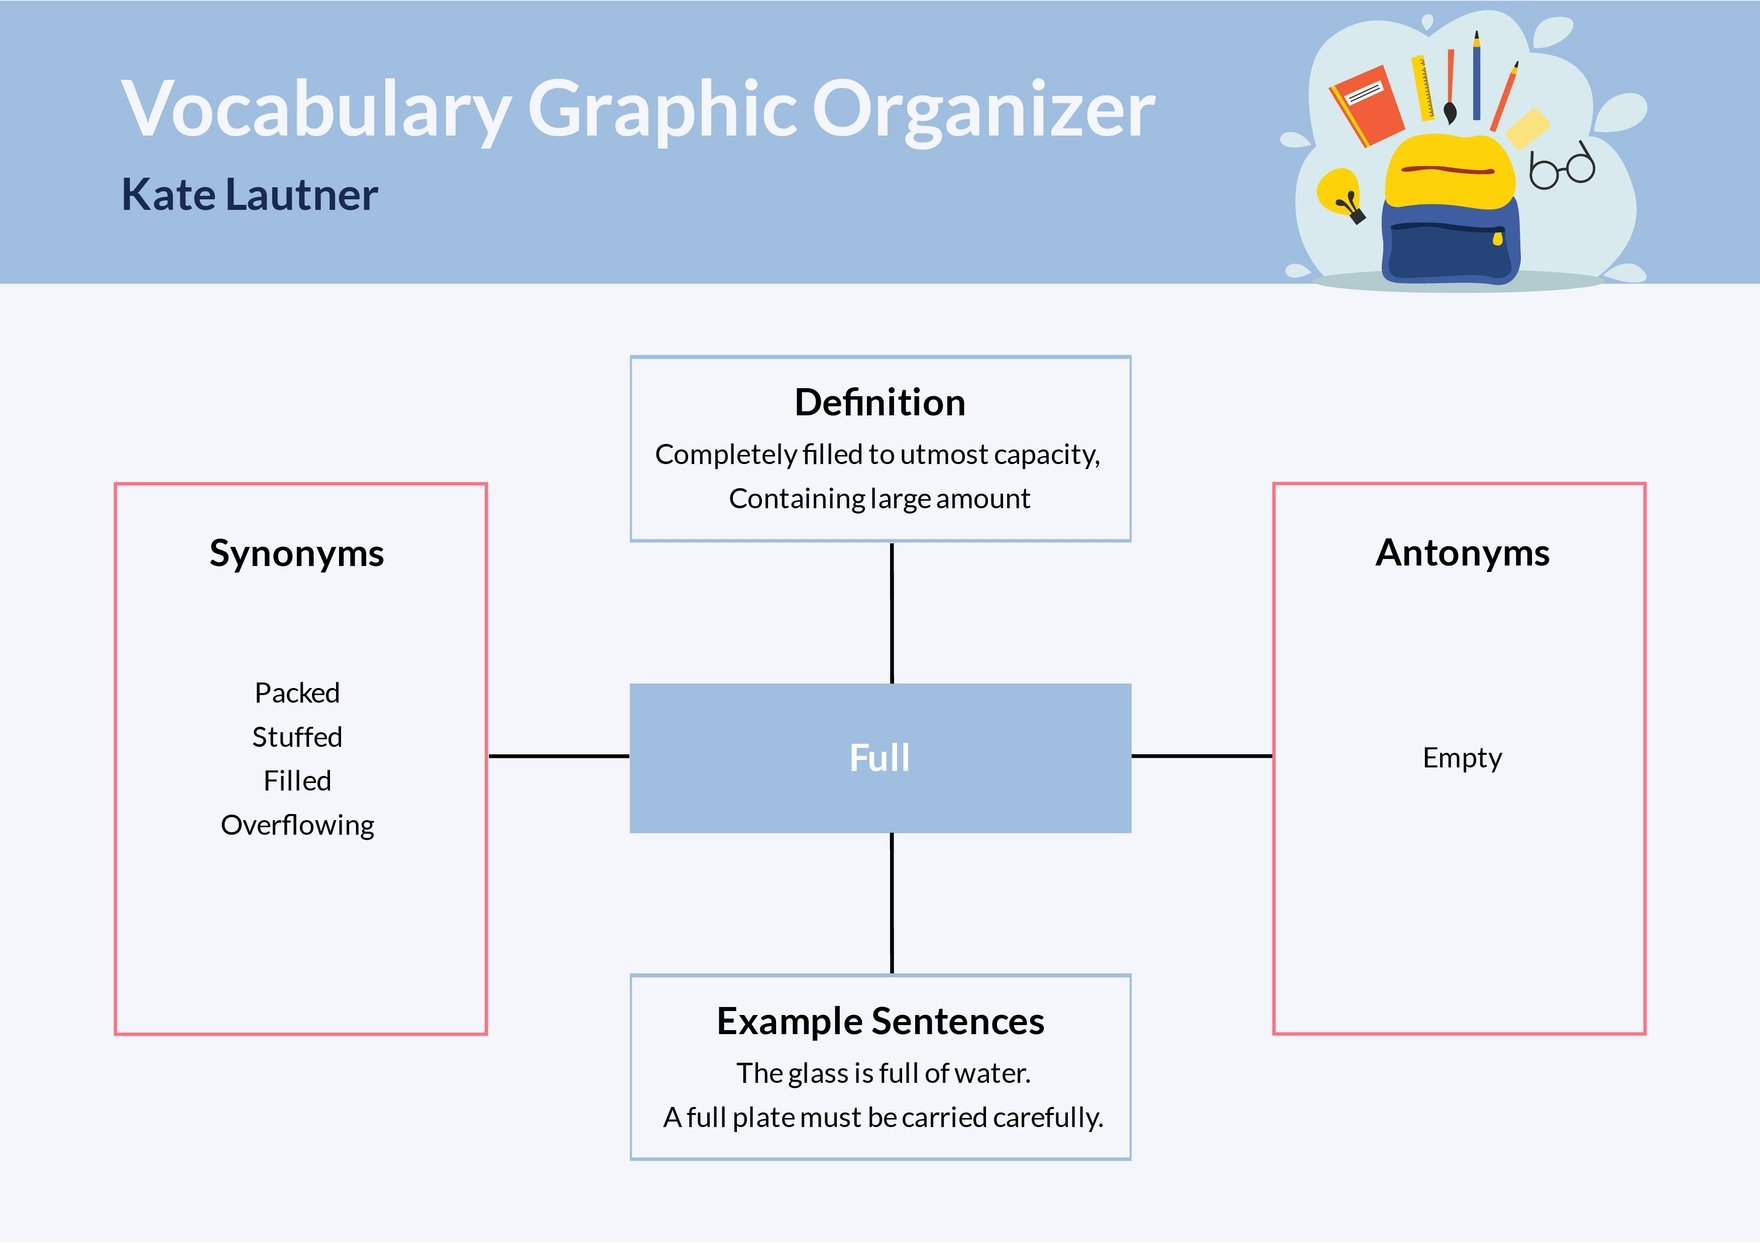 Vocabulary Graphic Organizer Template